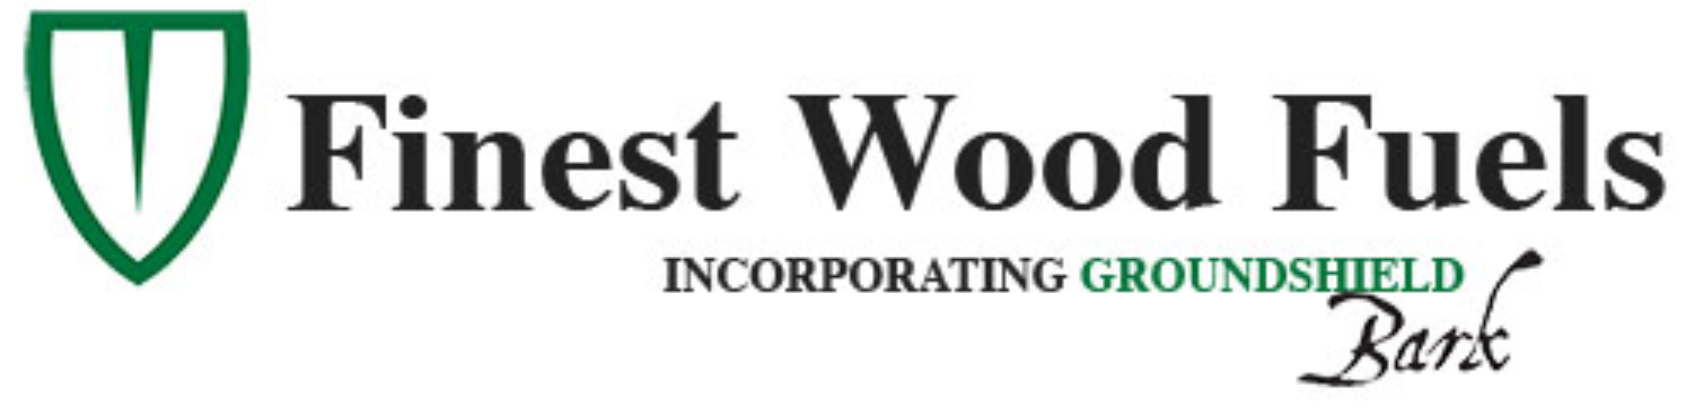 Finest Wood fuels Ltd  - GroundShield Bark